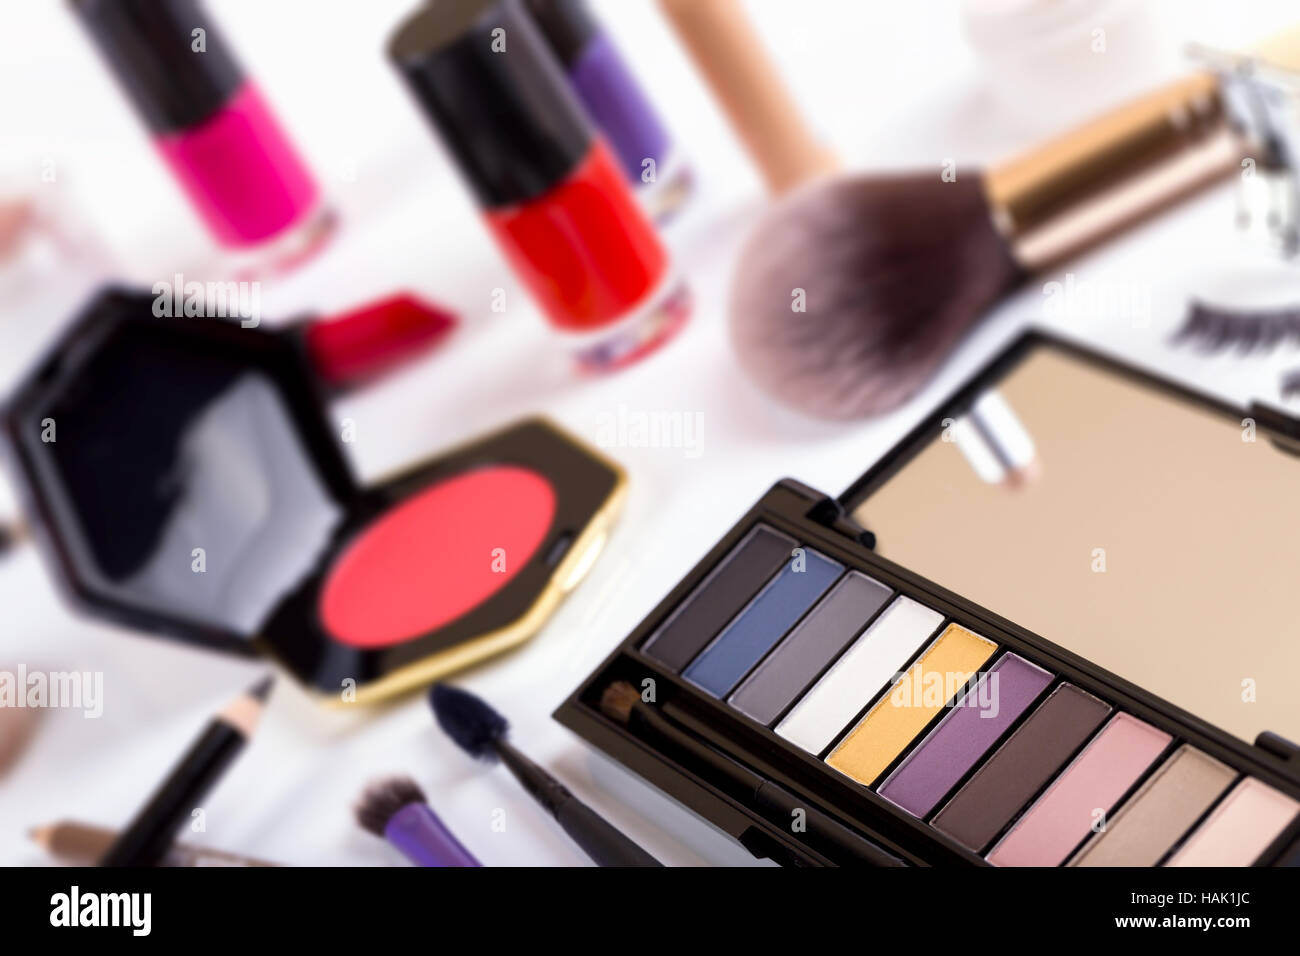 cosmetics - focus on eyeshadows palette Stock Photo